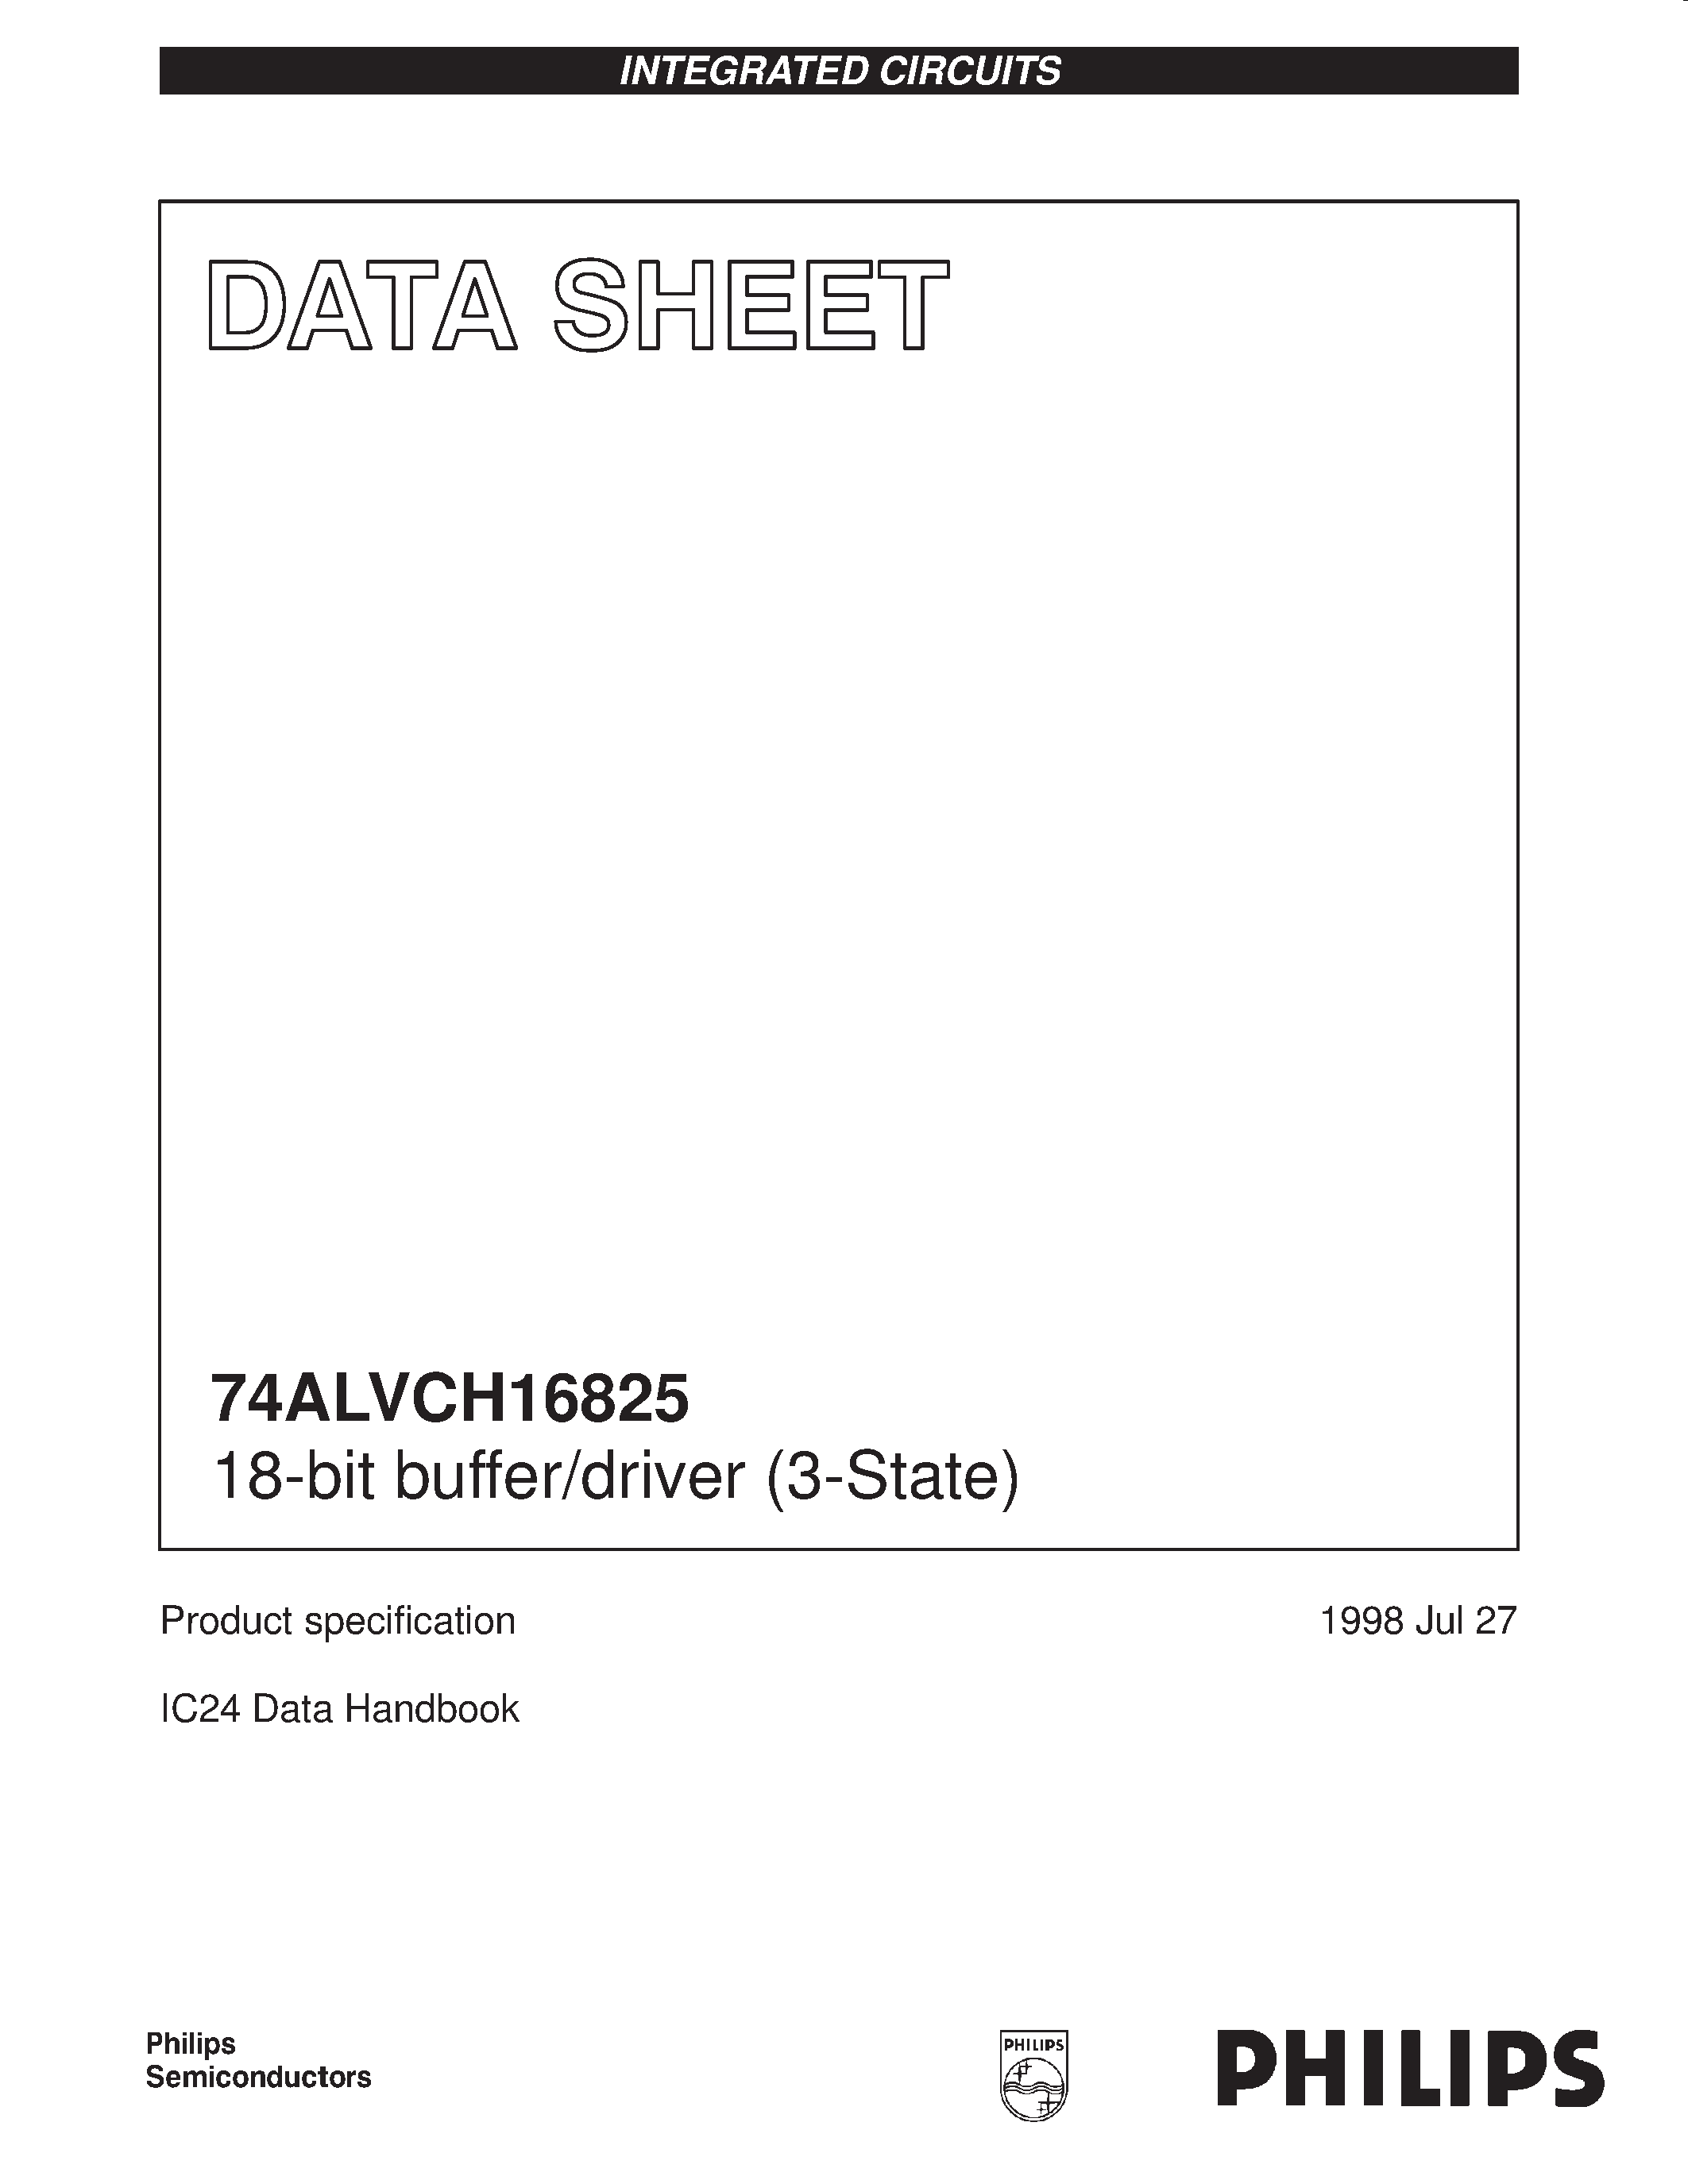 Даташит 74ALVCH16825 - 18-bit buffer/driver 3-State страница 1